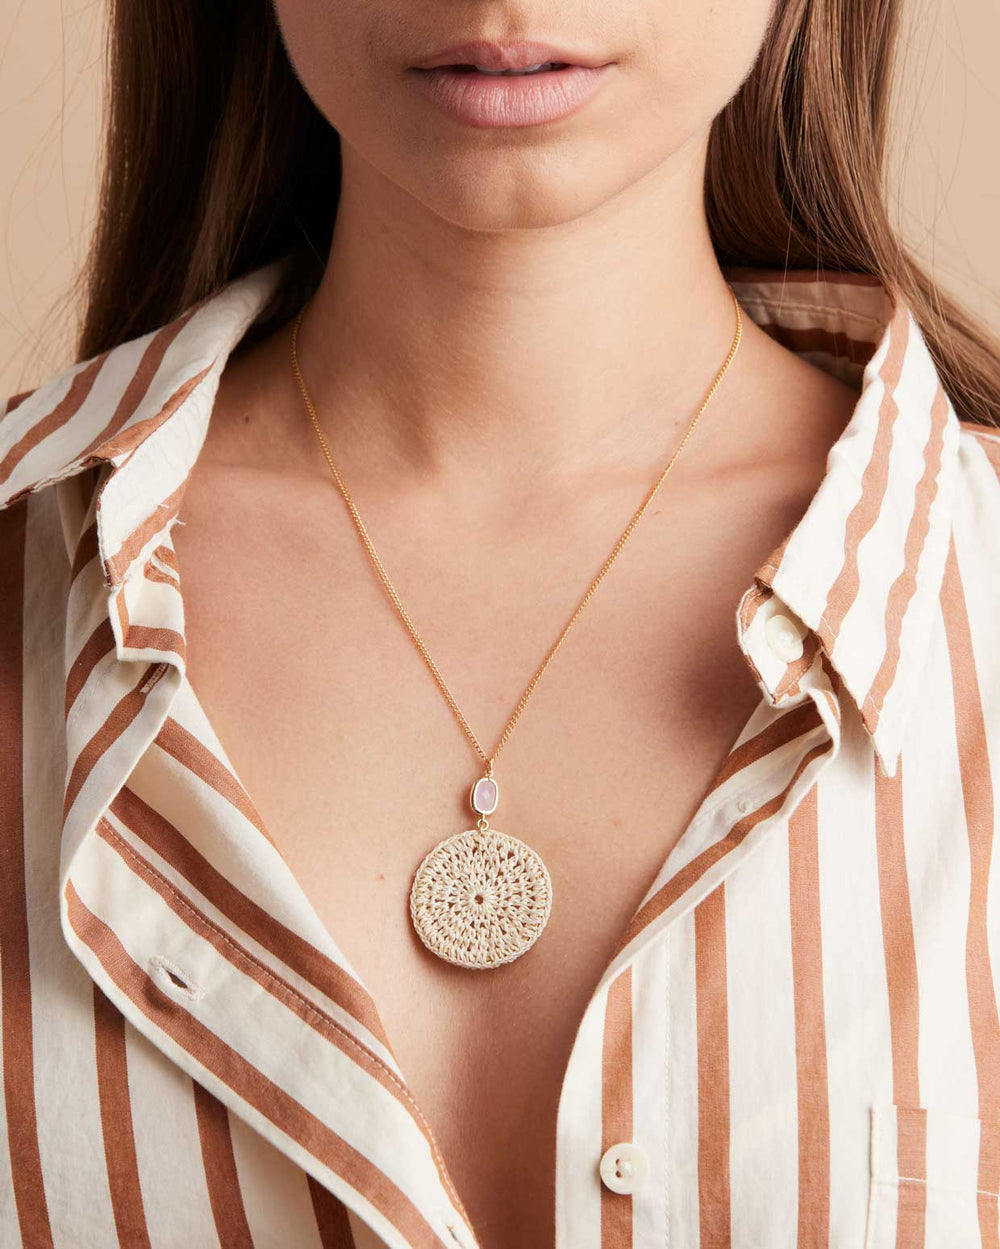 Model wearing Bilum and Bilas crochet style Kala necklace with pink stone pendant